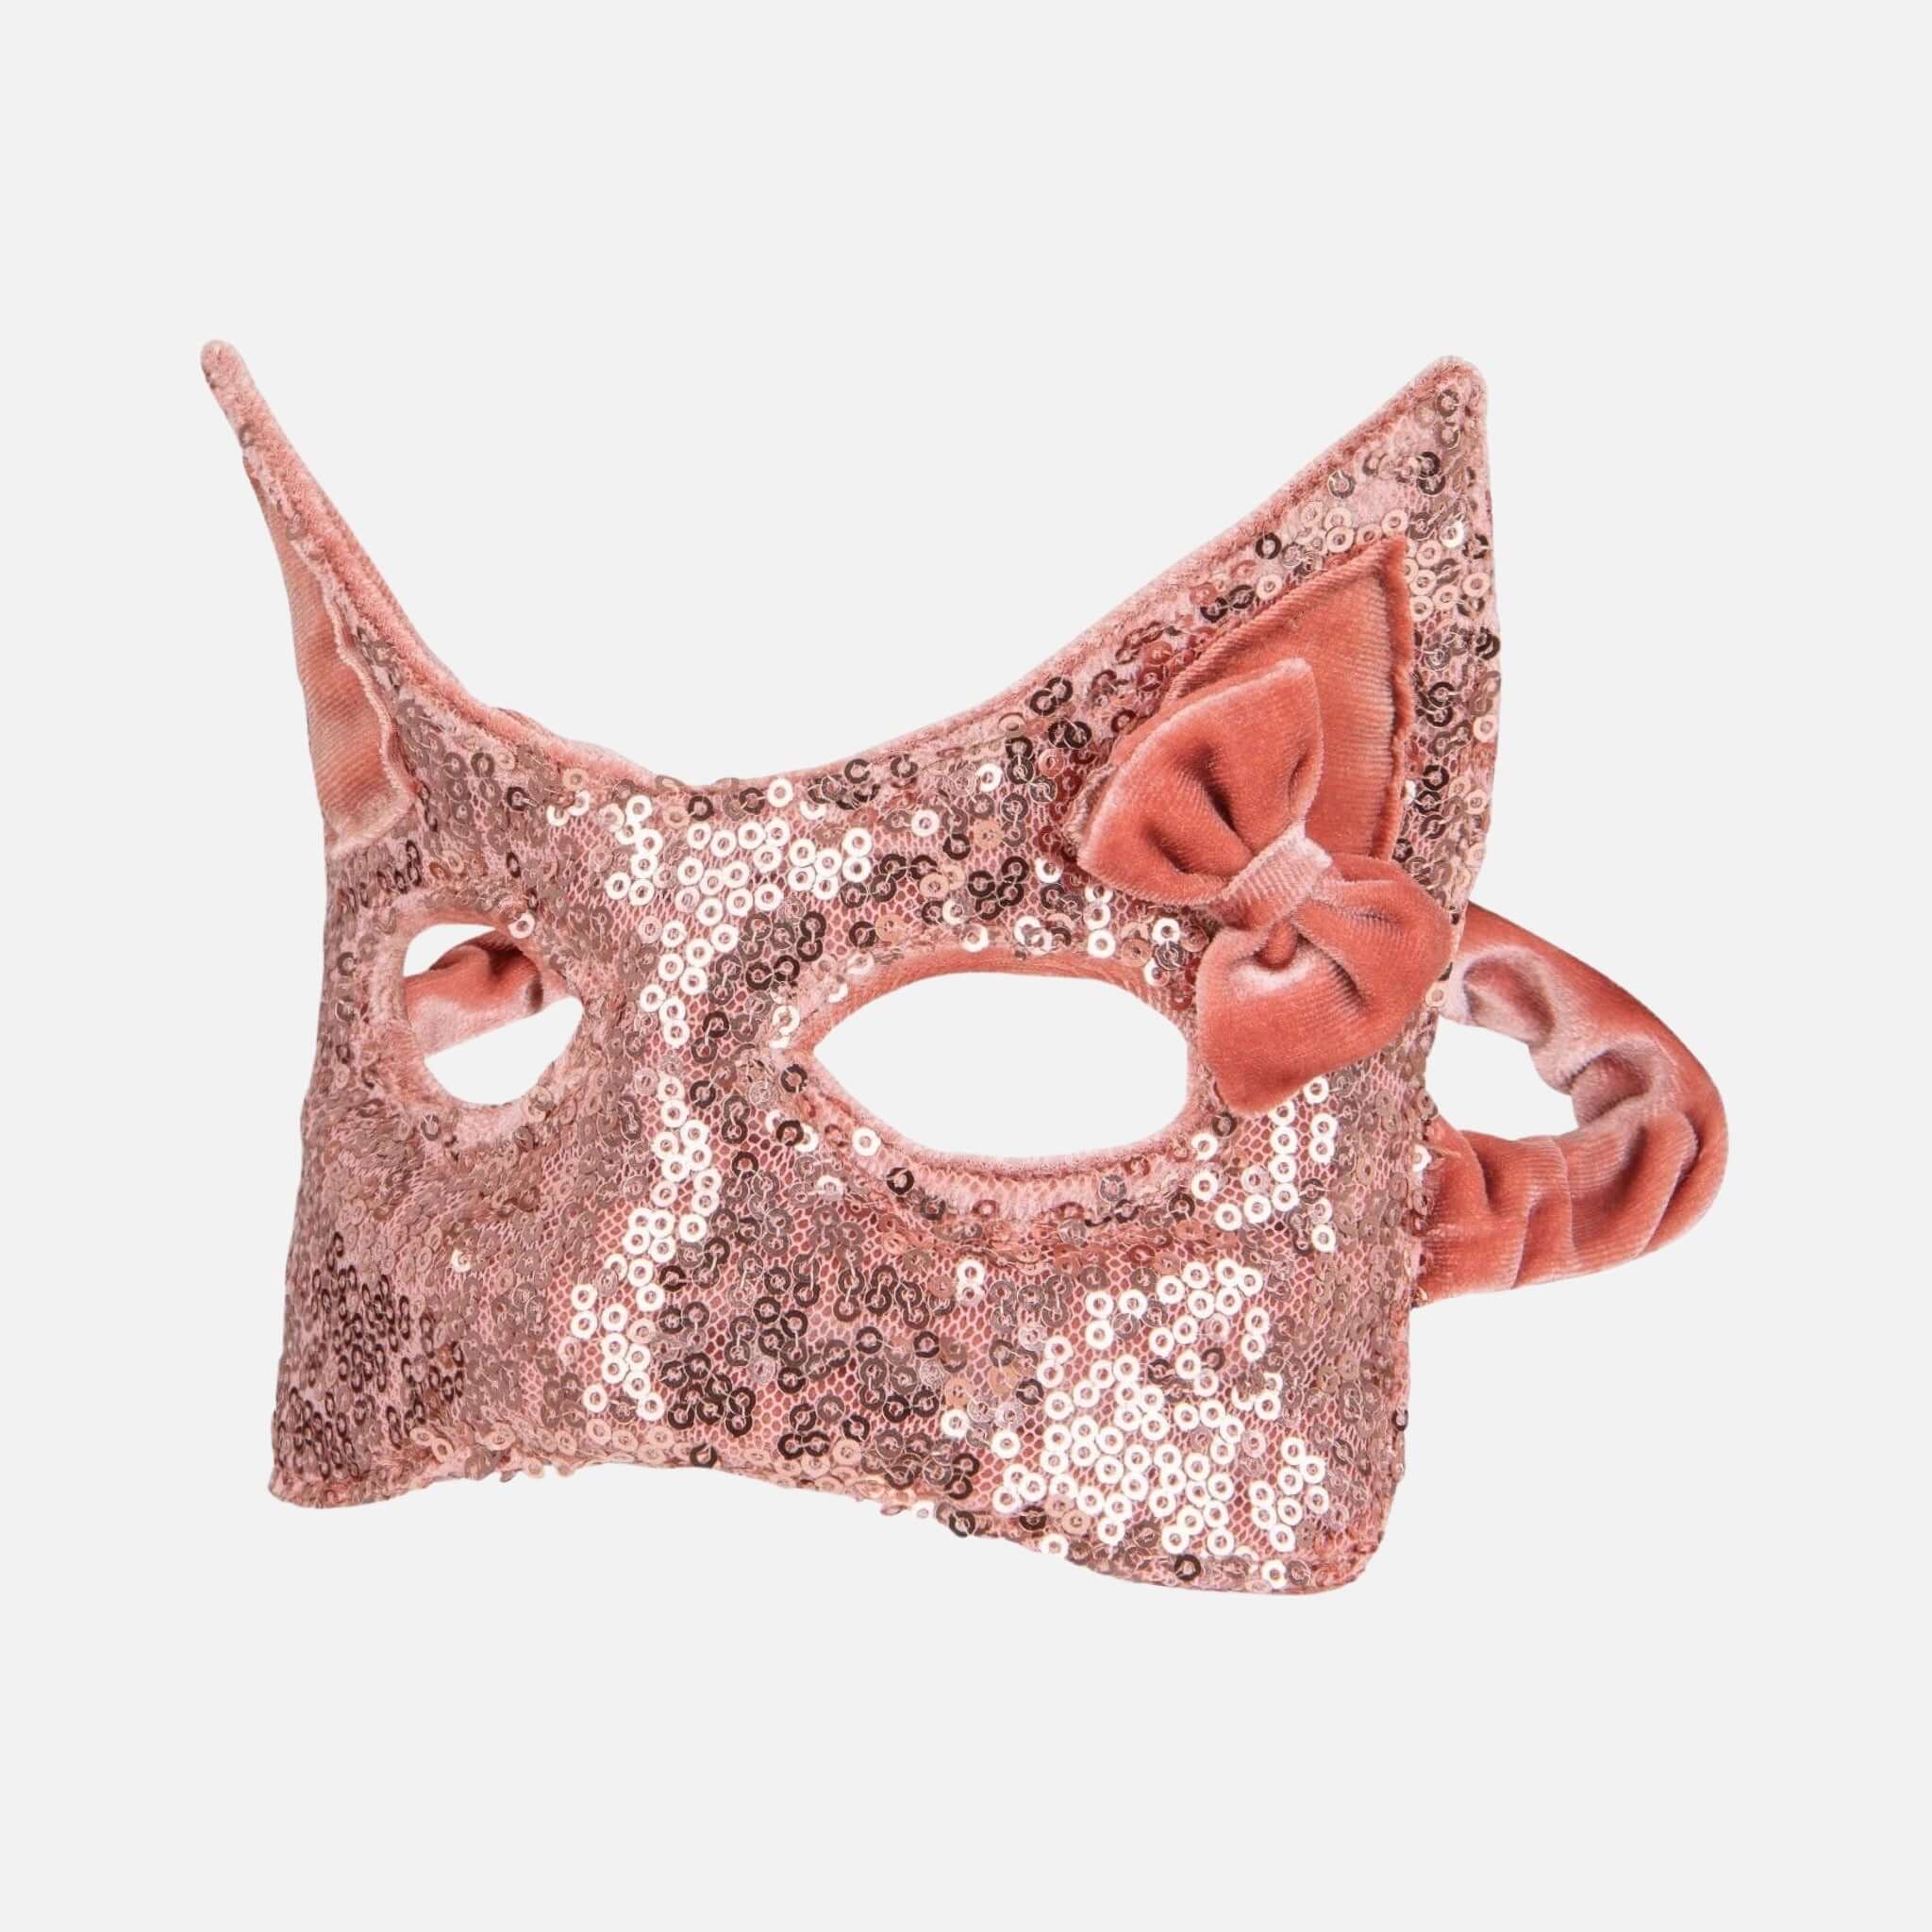 Rosa Katzenmaske mit Pailletten